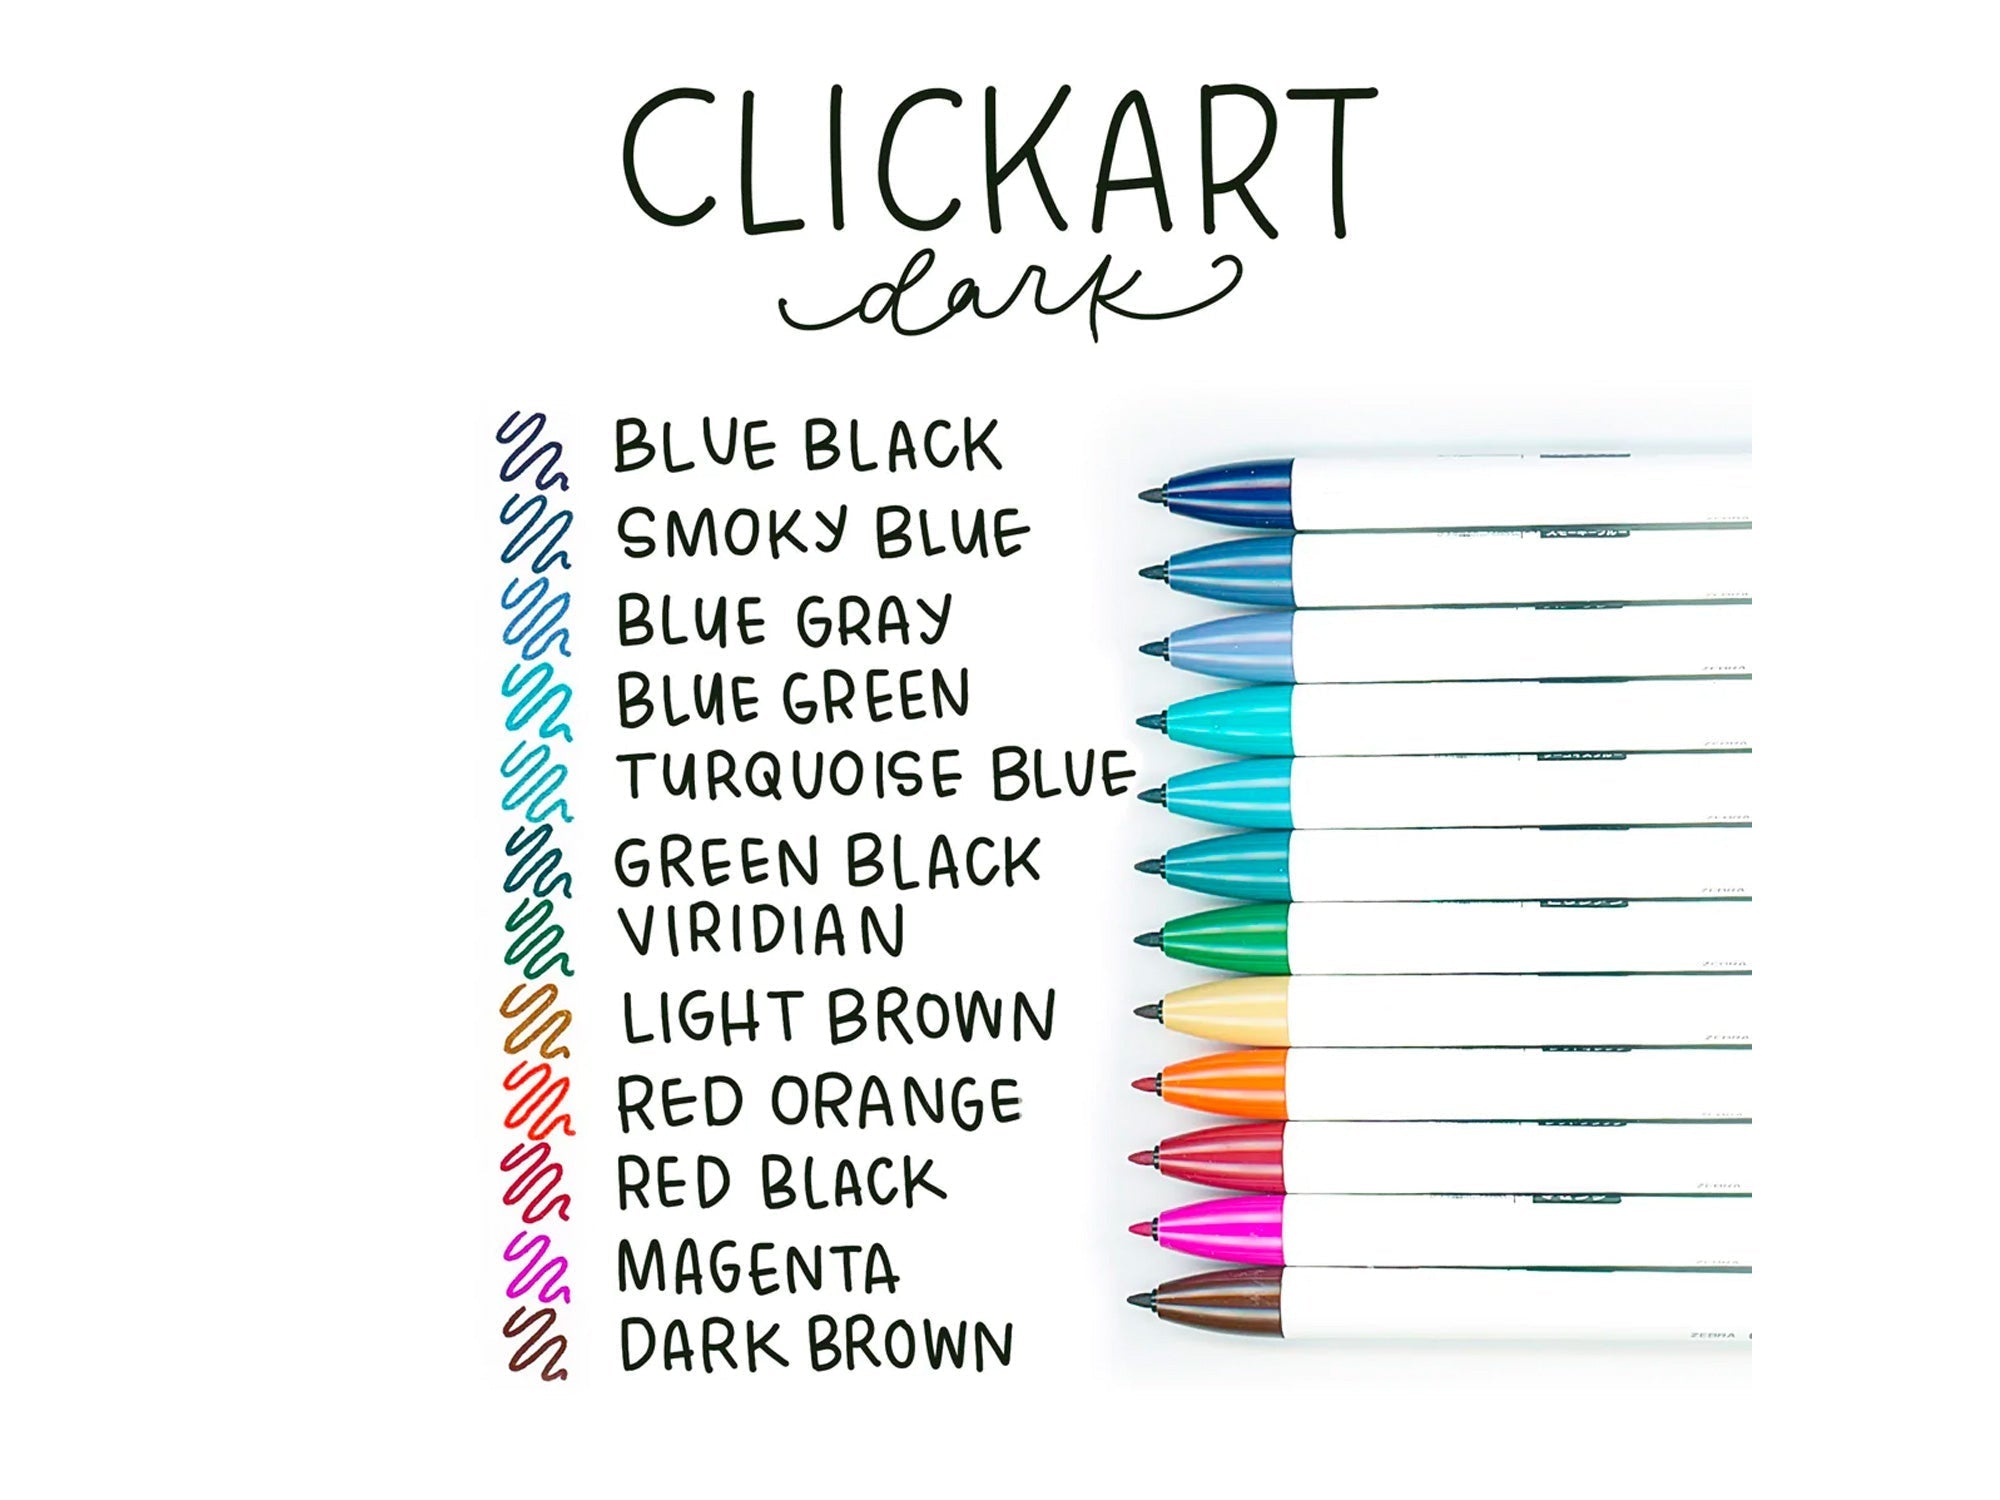 Zebra ClickArt Marker Pen 0.6mm Light Green